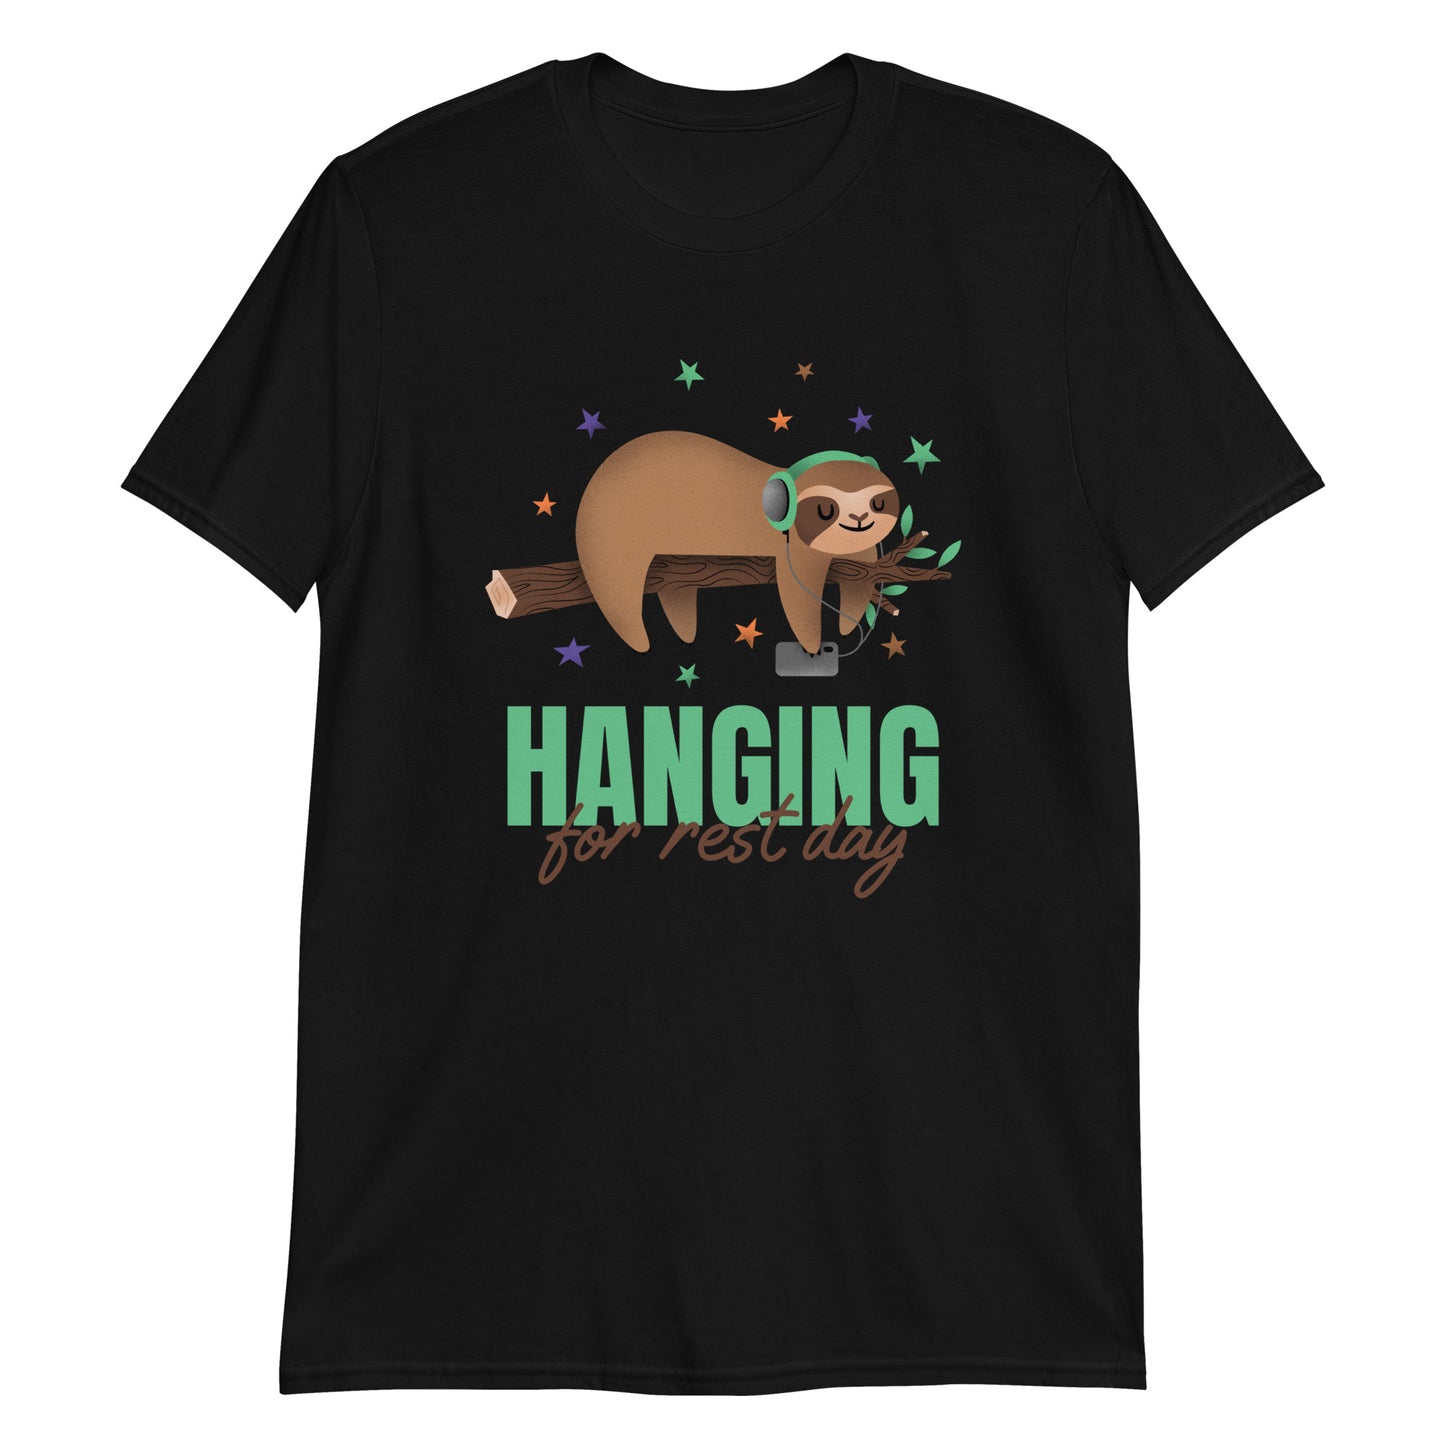 Hanging For Rest Day - Short-Sleeve Unisex T-Shirt Black Unisex T-shirt Animal